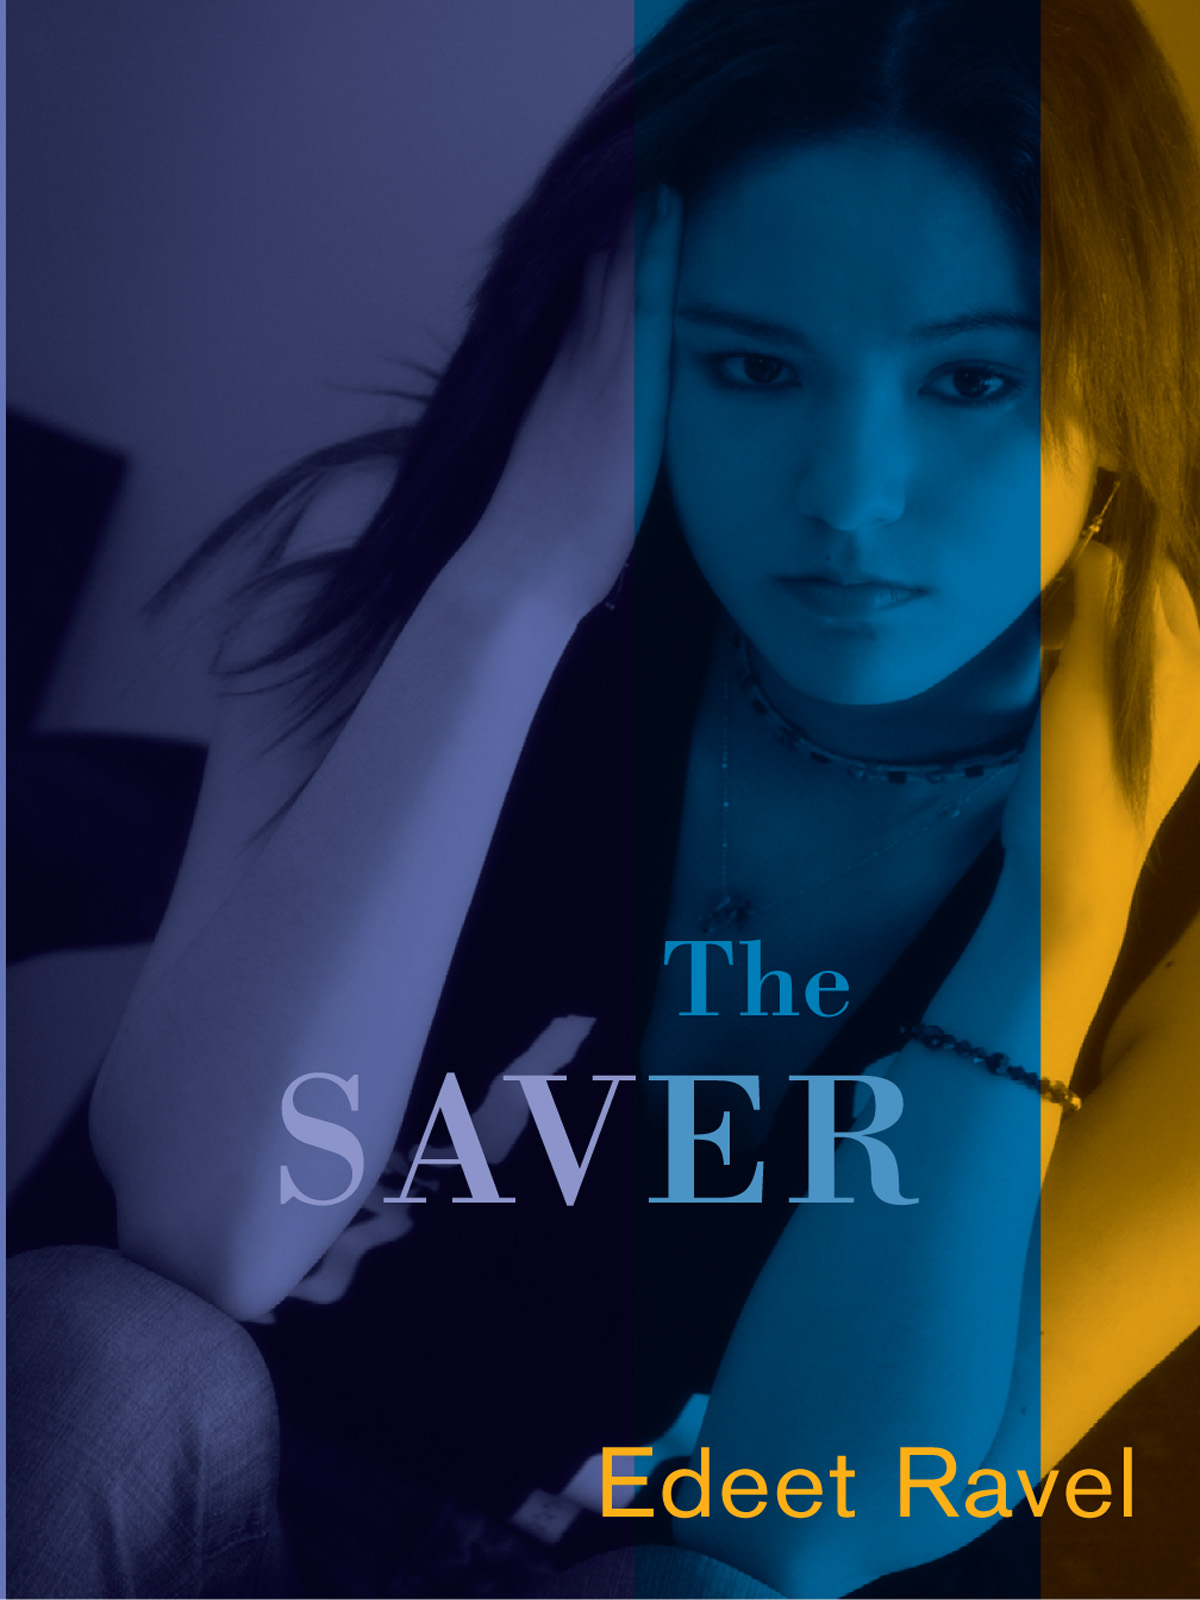 The Saver (2008) by Edeet Ravel